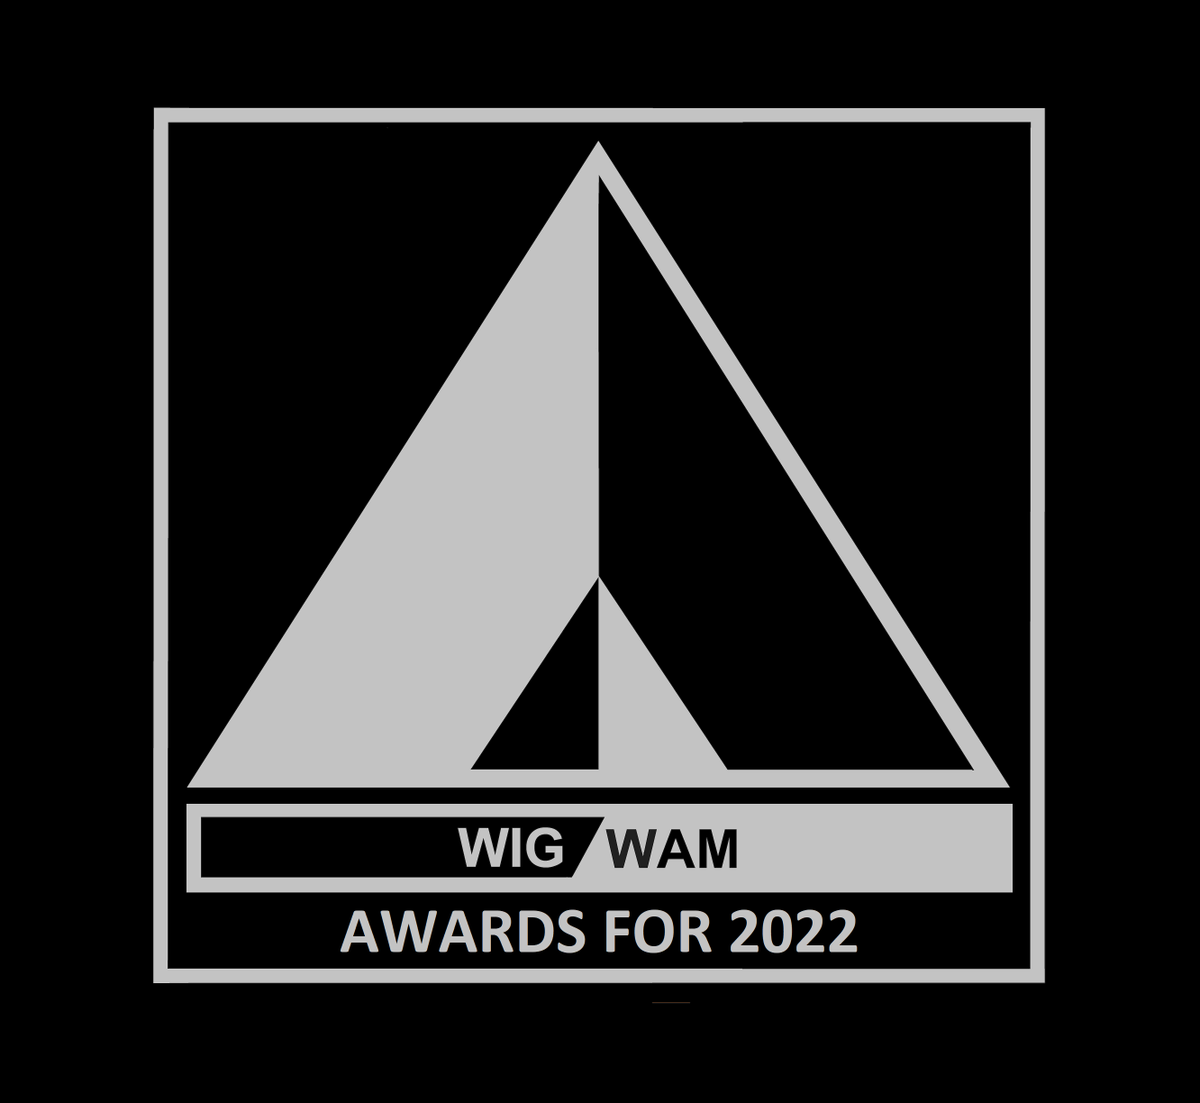 WIGWAM AWARDS: Hear all the Best Song nominees - Sunday 9pm UK, 10pm CET (Europe) then 9pm EST (Americas). Click on radiowigwam.co.uk With @psyenceuk @Emma_Scott @blackwolftrap @between_daze @PaytronSaint @louis_shakes @VANTEband1 @outsideinnz @sonic_whip @screamsofyouth